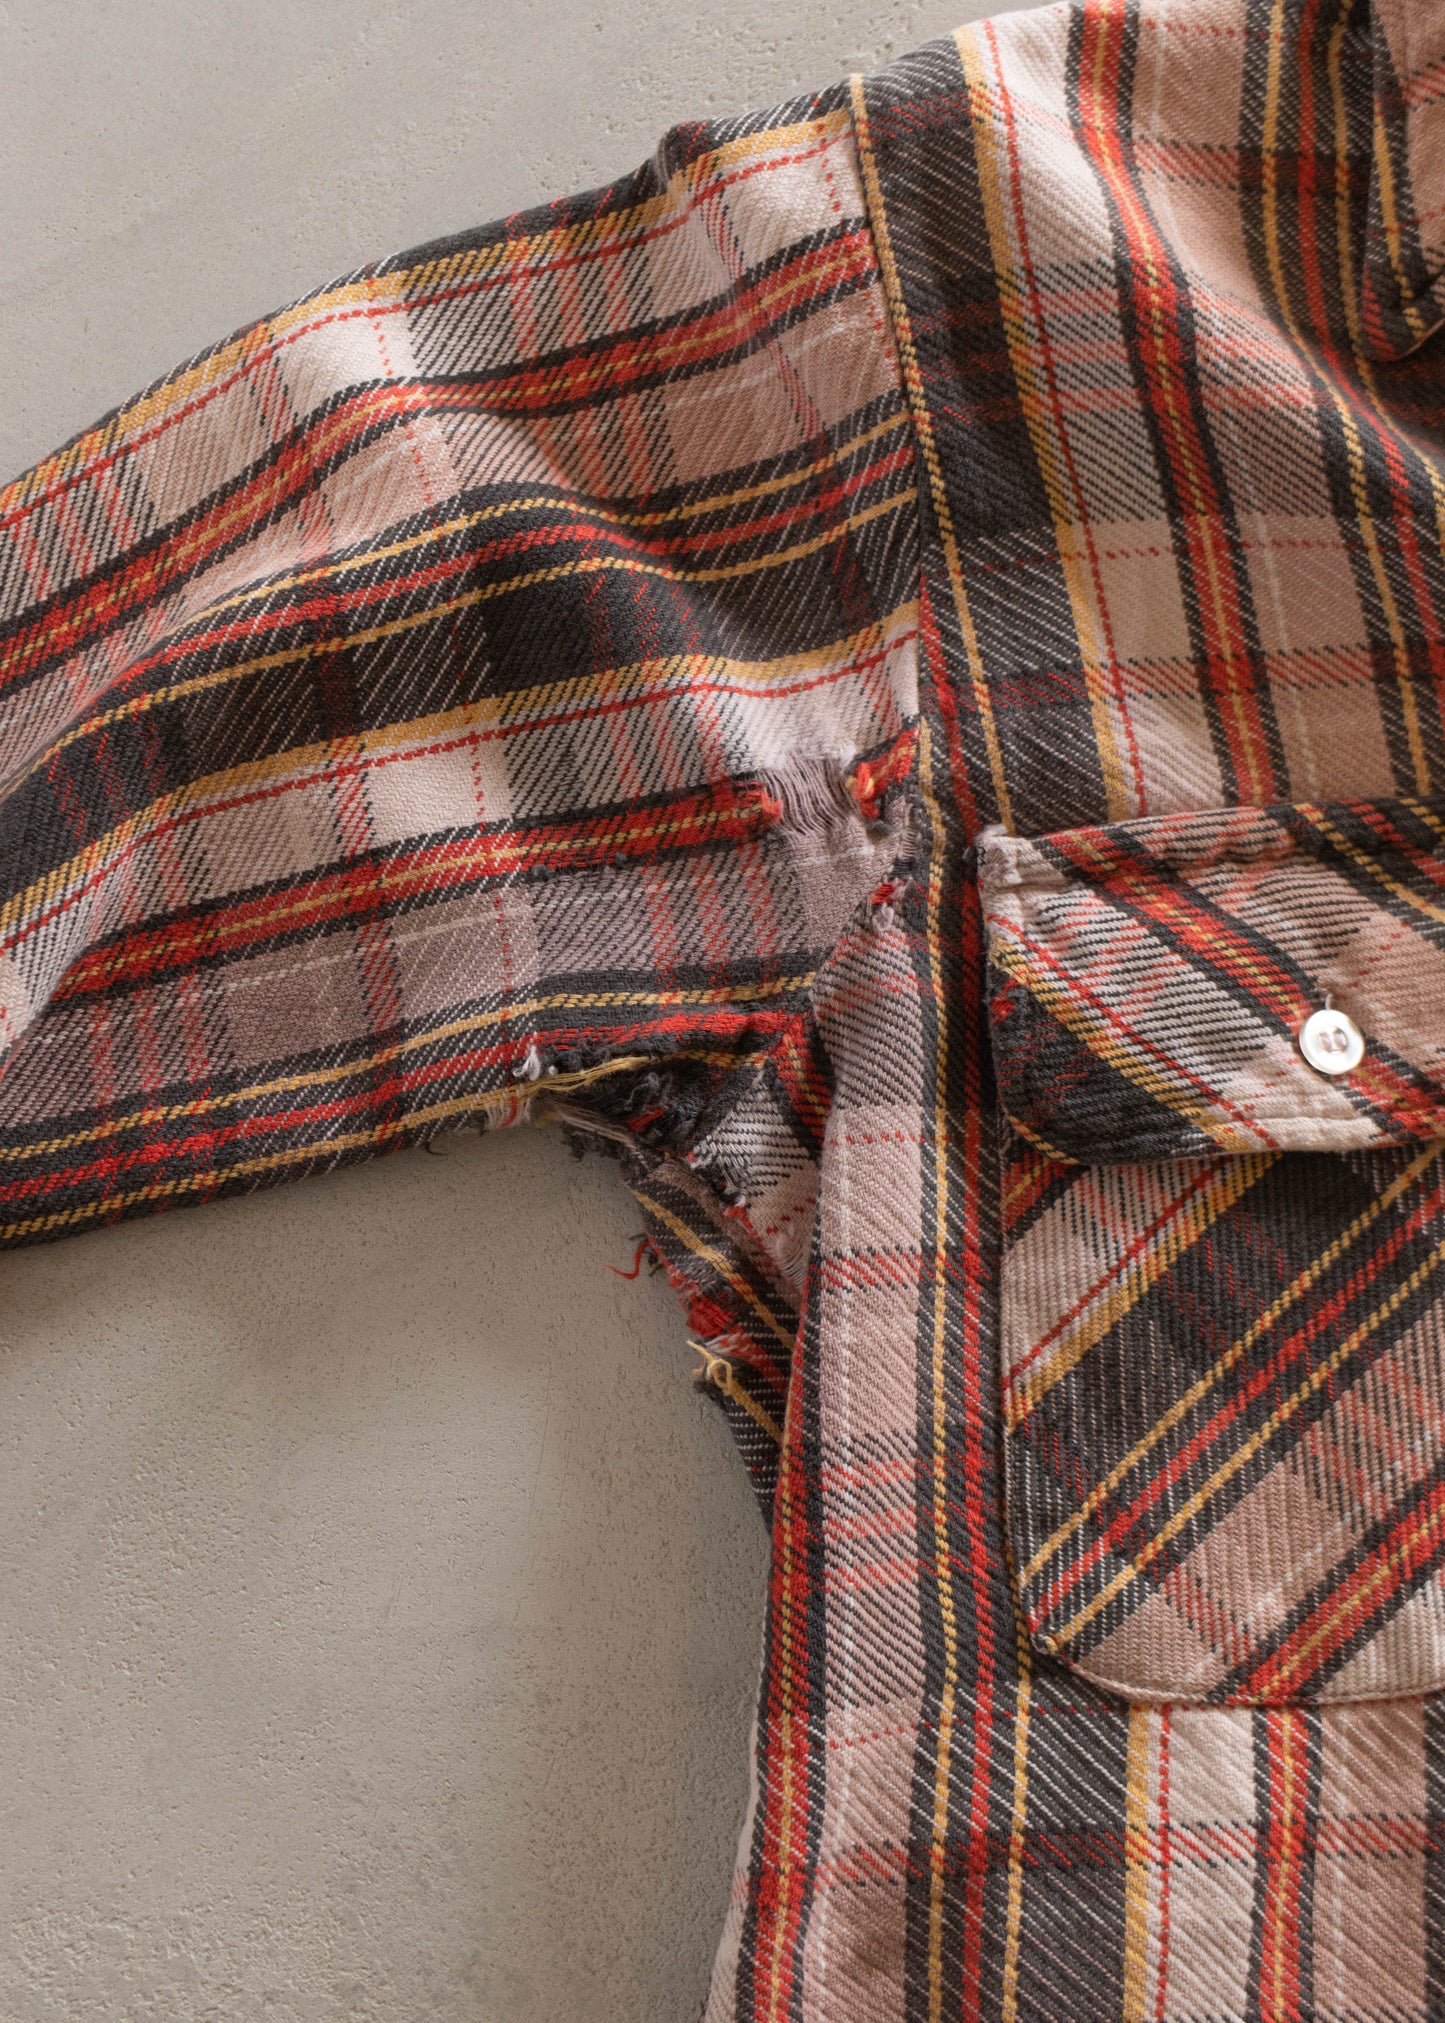 1970s Cotton Flannel Button Up Shirt Size XS/S